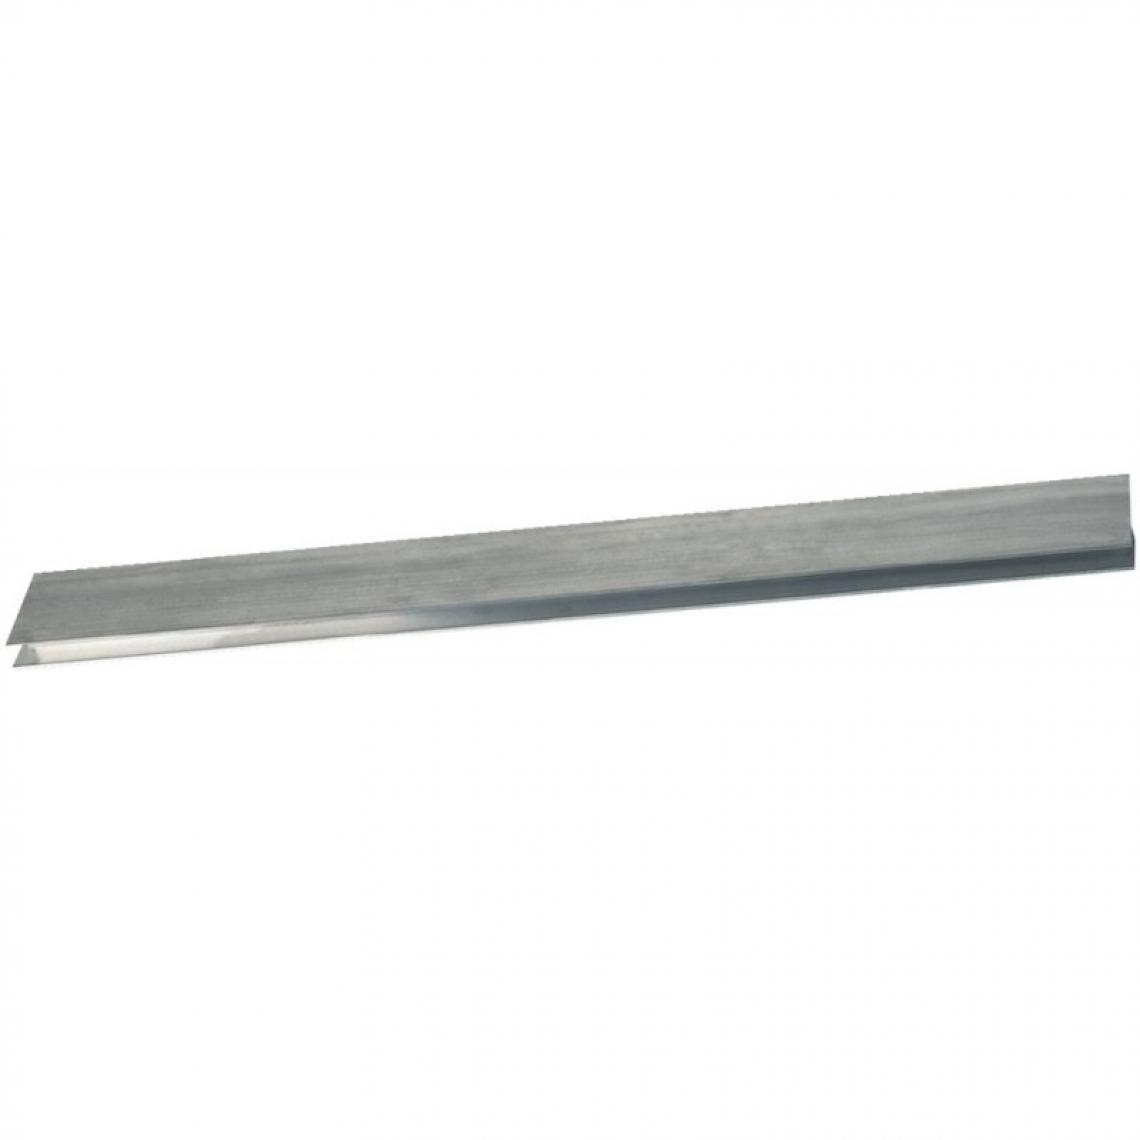 marque generique - Barre droit en aluminium profil h 1,2 m - Appareils de mesure